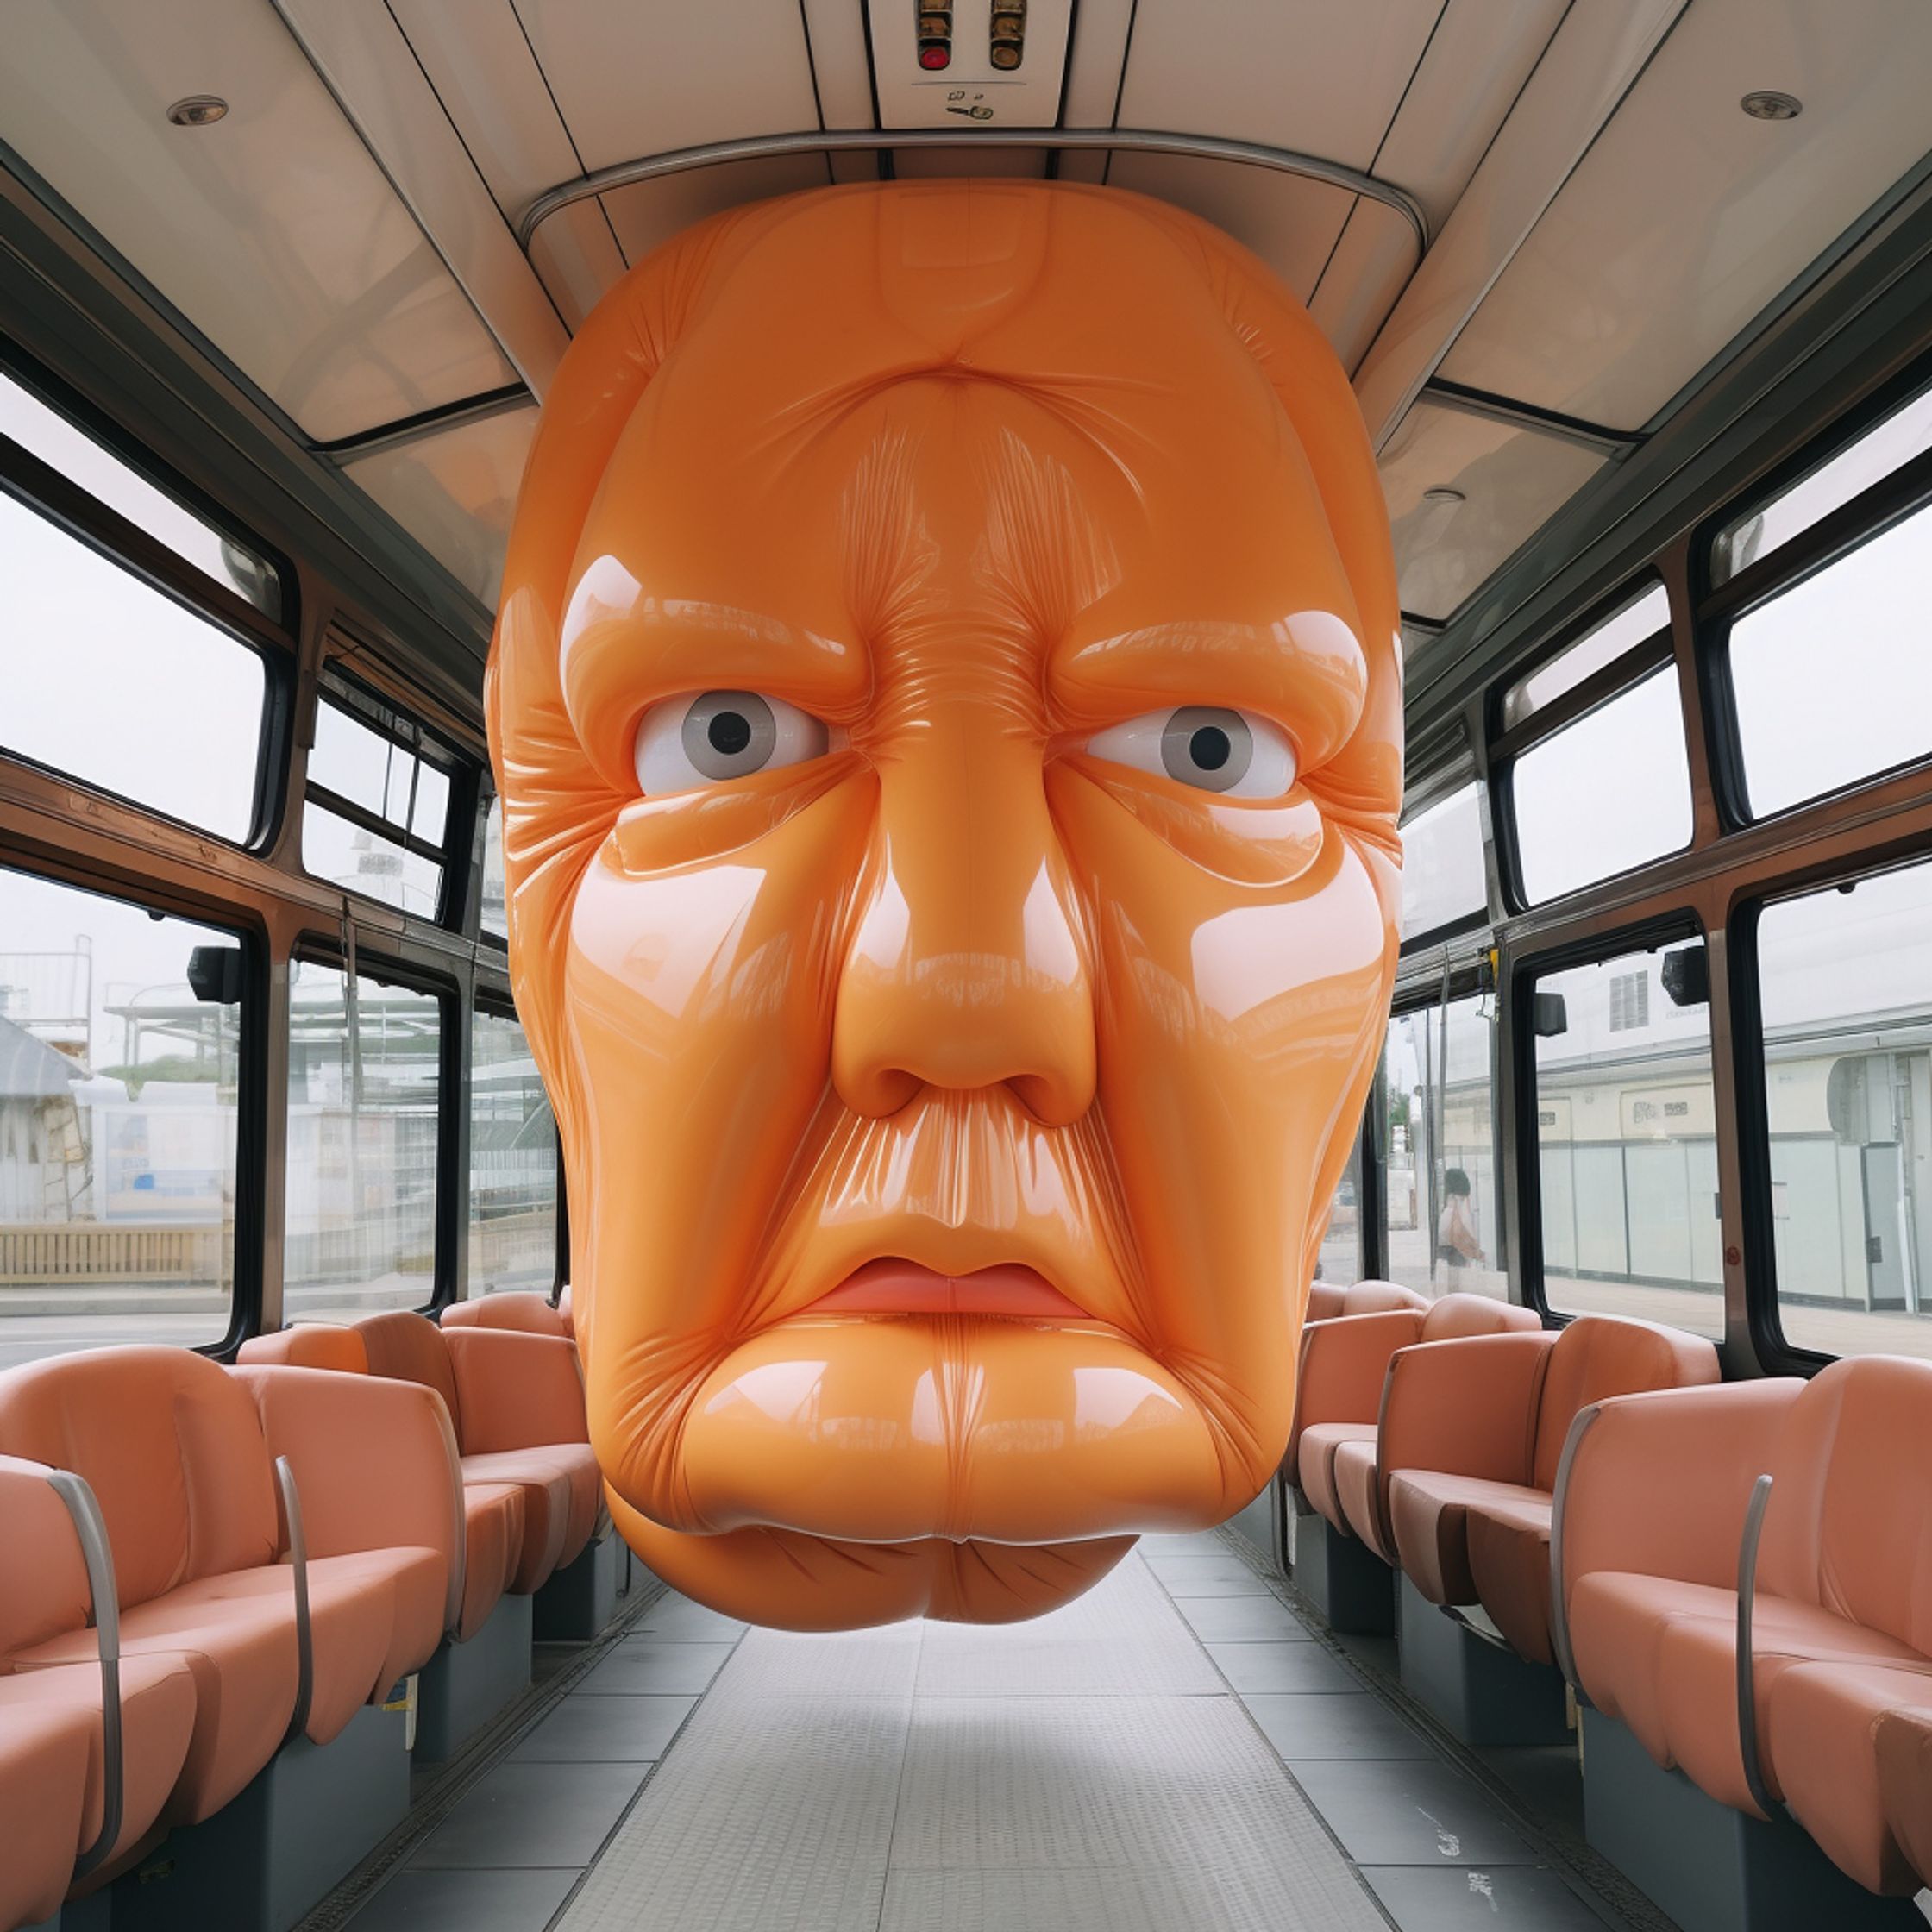 a large orange head on a bus